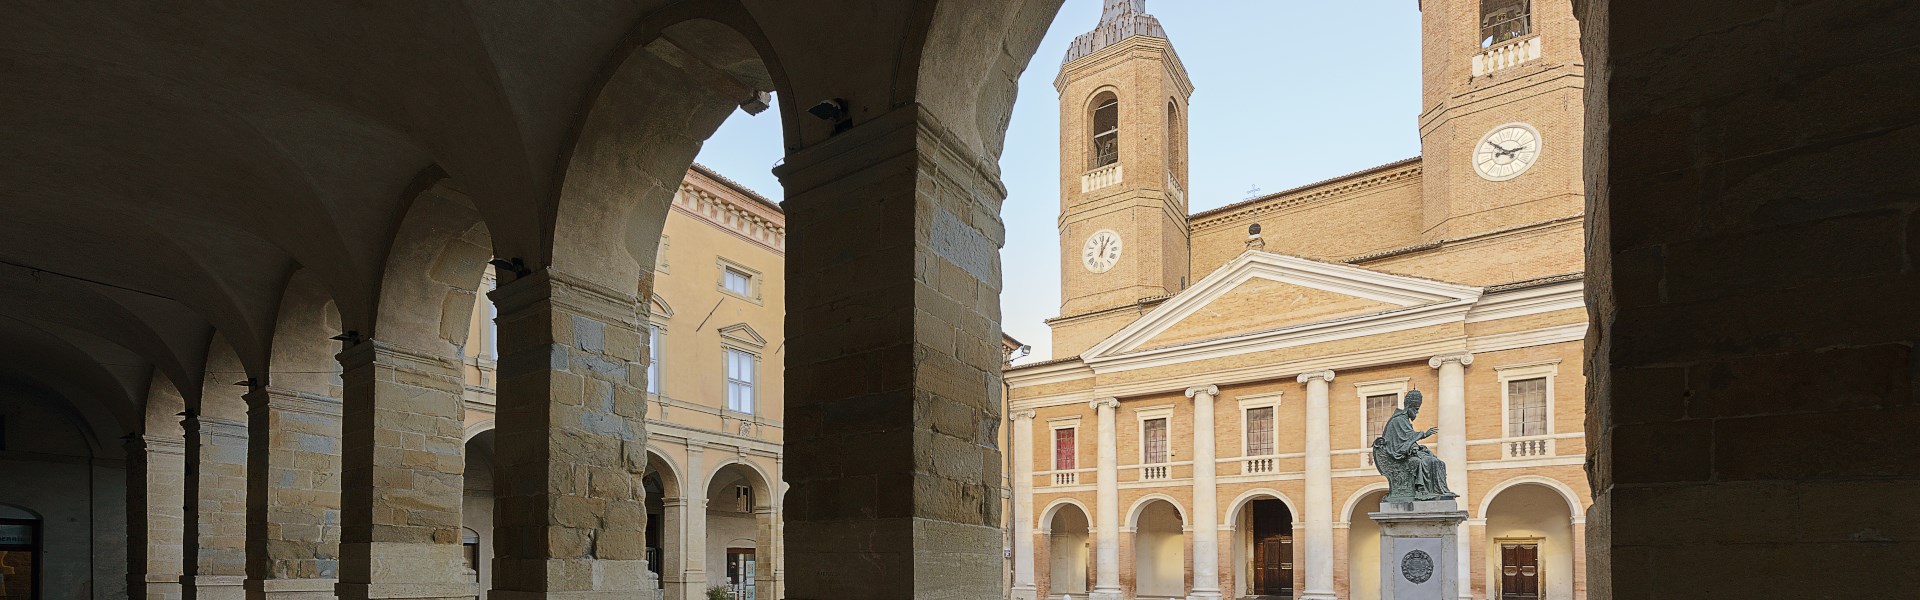 Camerino - Cattedrale di Santa Maria Annunziata